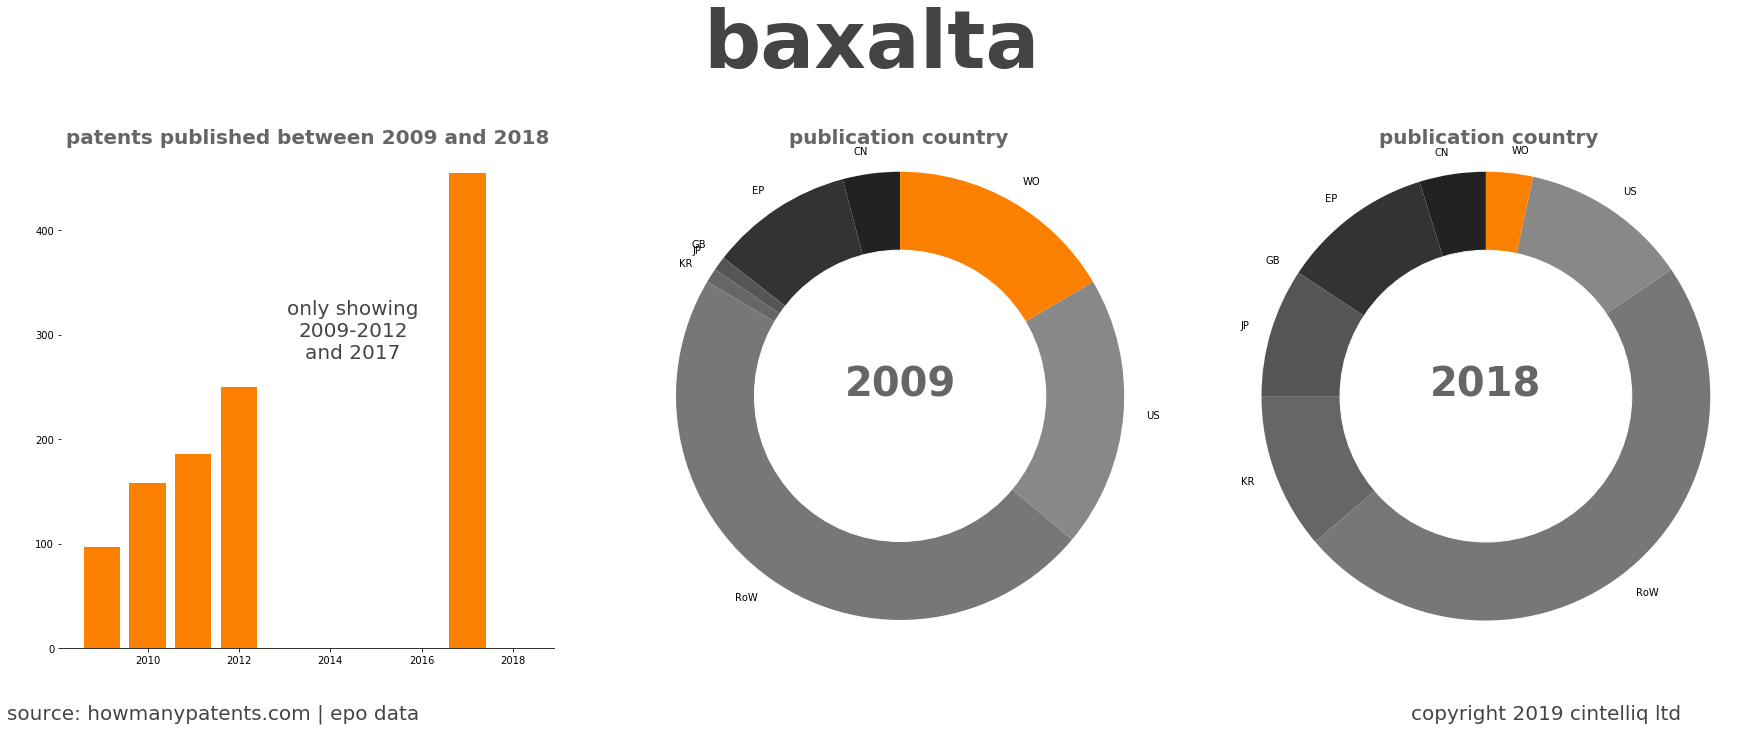 summary of patents for Baxalta